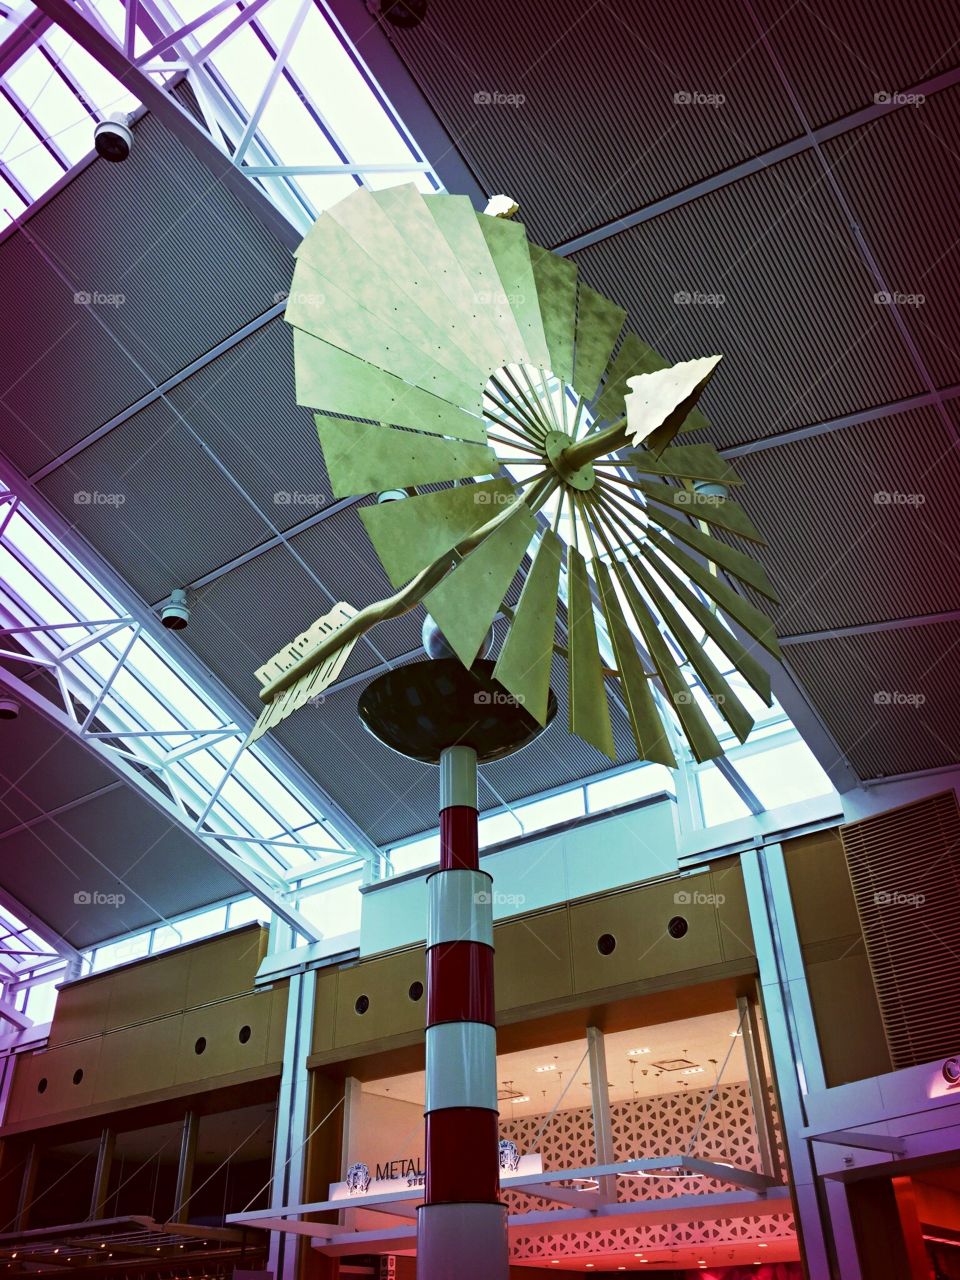 Airport sculpture